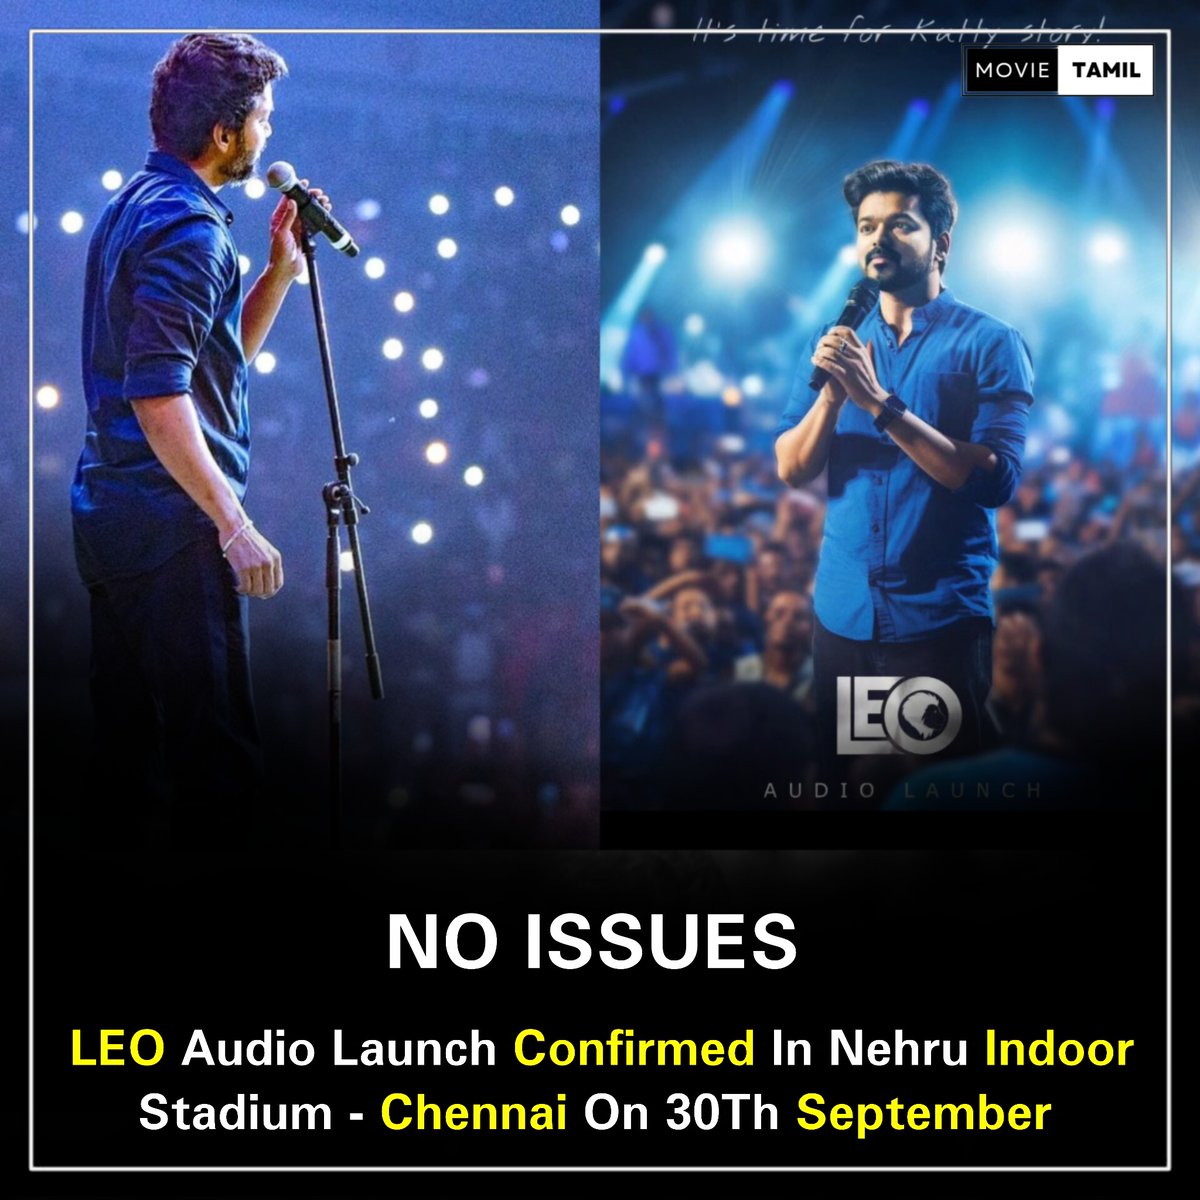 Exclusive

🔸#LEOAudioLaunch - No Issues September 30 Confirmed In Nehru Indoor Stadium in Chennai

Follow For More Updates 🙏

🔹#ThalapathyVijay - #LokeshKanakaraj #LeofromOct19 #LeoHindiPoster #LeoPosterFeast #LEO #LeoTamilPoster #LeoKannadaPoster #LeoAdvanceBooking